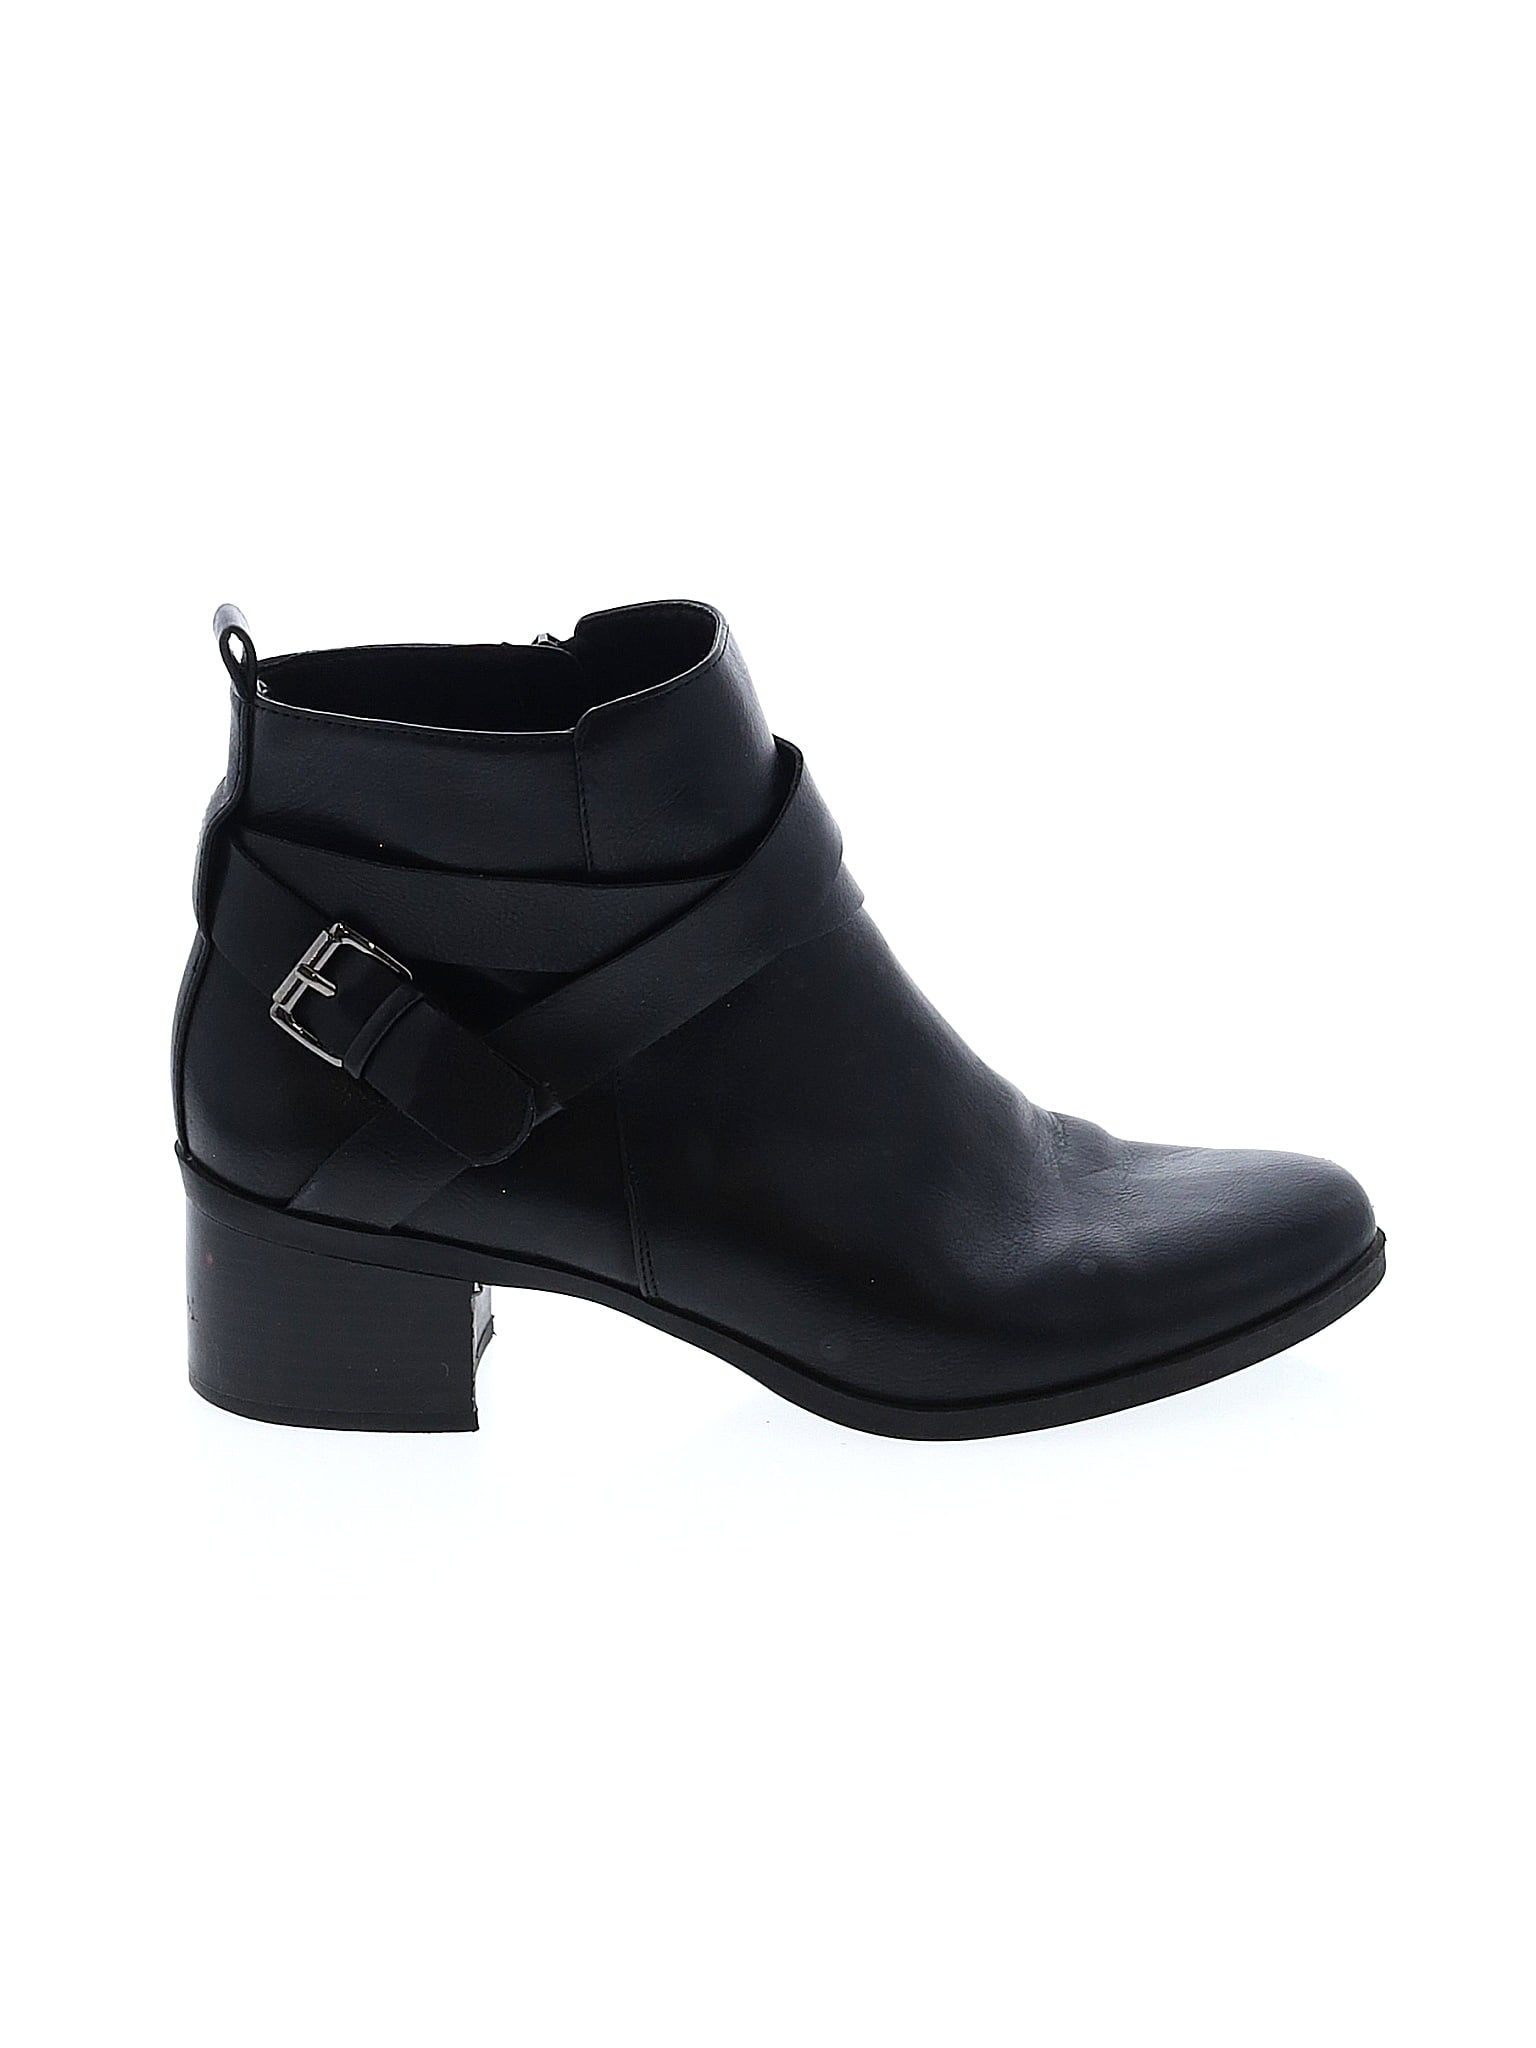 Anne Klein Solid Black Ankle Boots Size 8 1/2 - 67% off | thredUP